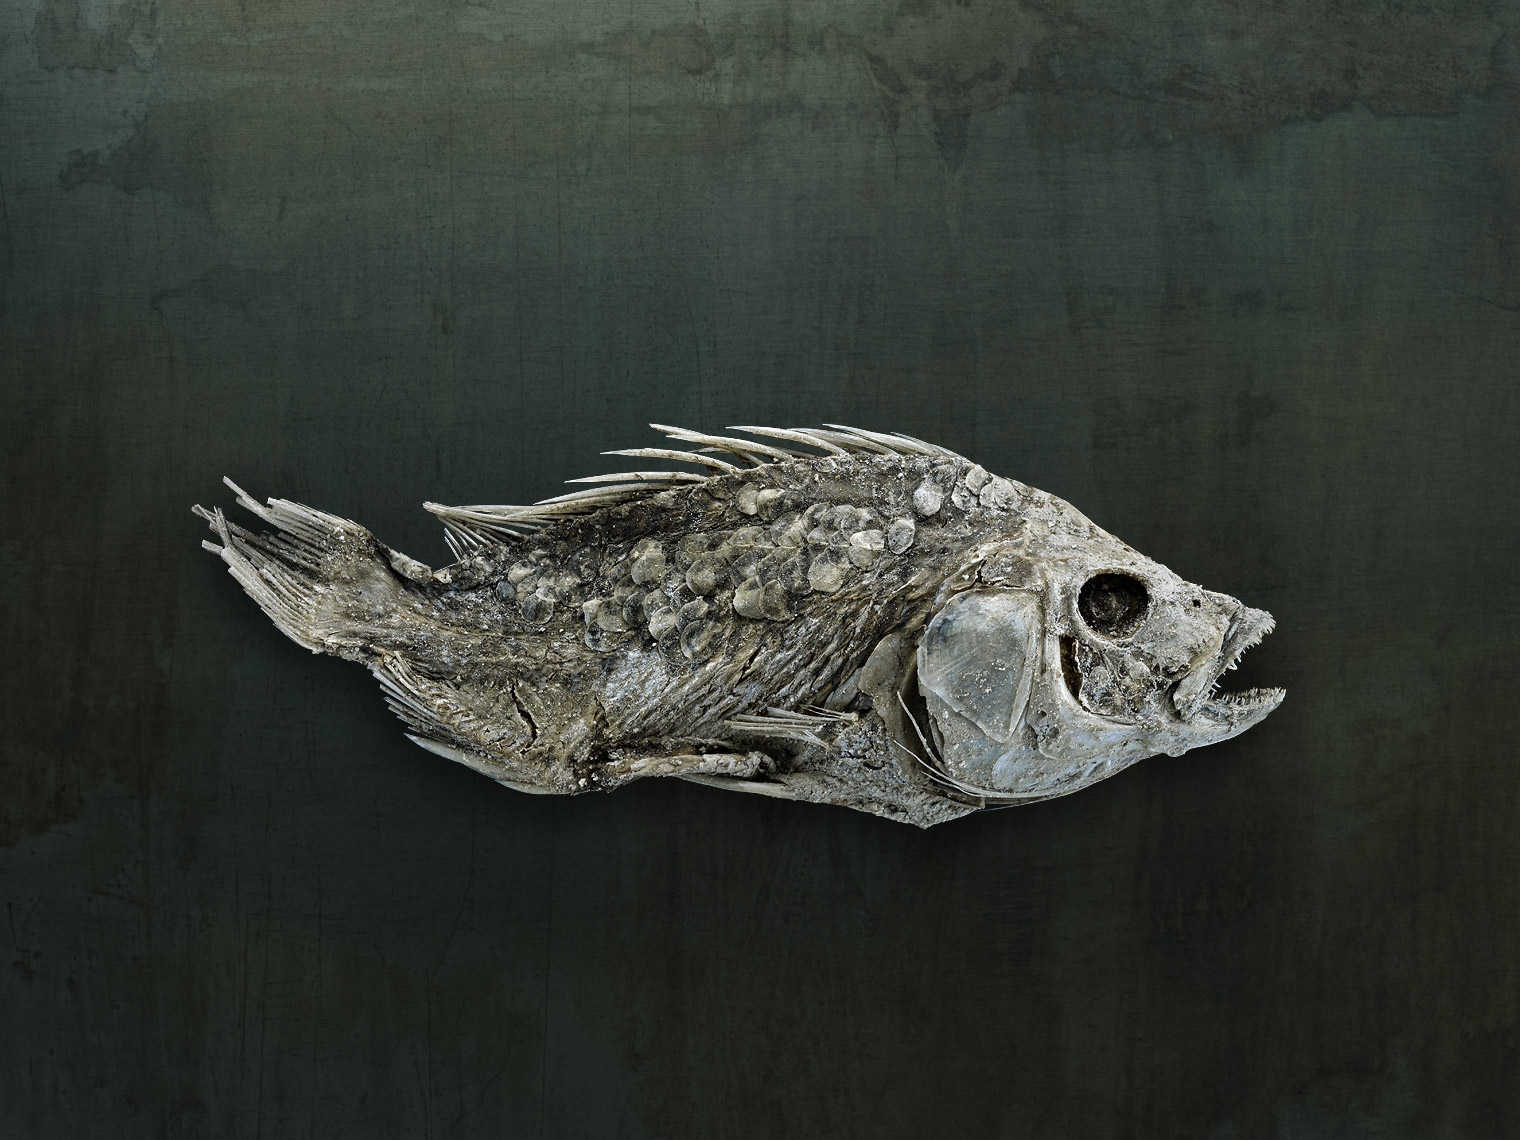 Salton Sea fish still life by fine art animal photographer Brad Wilson